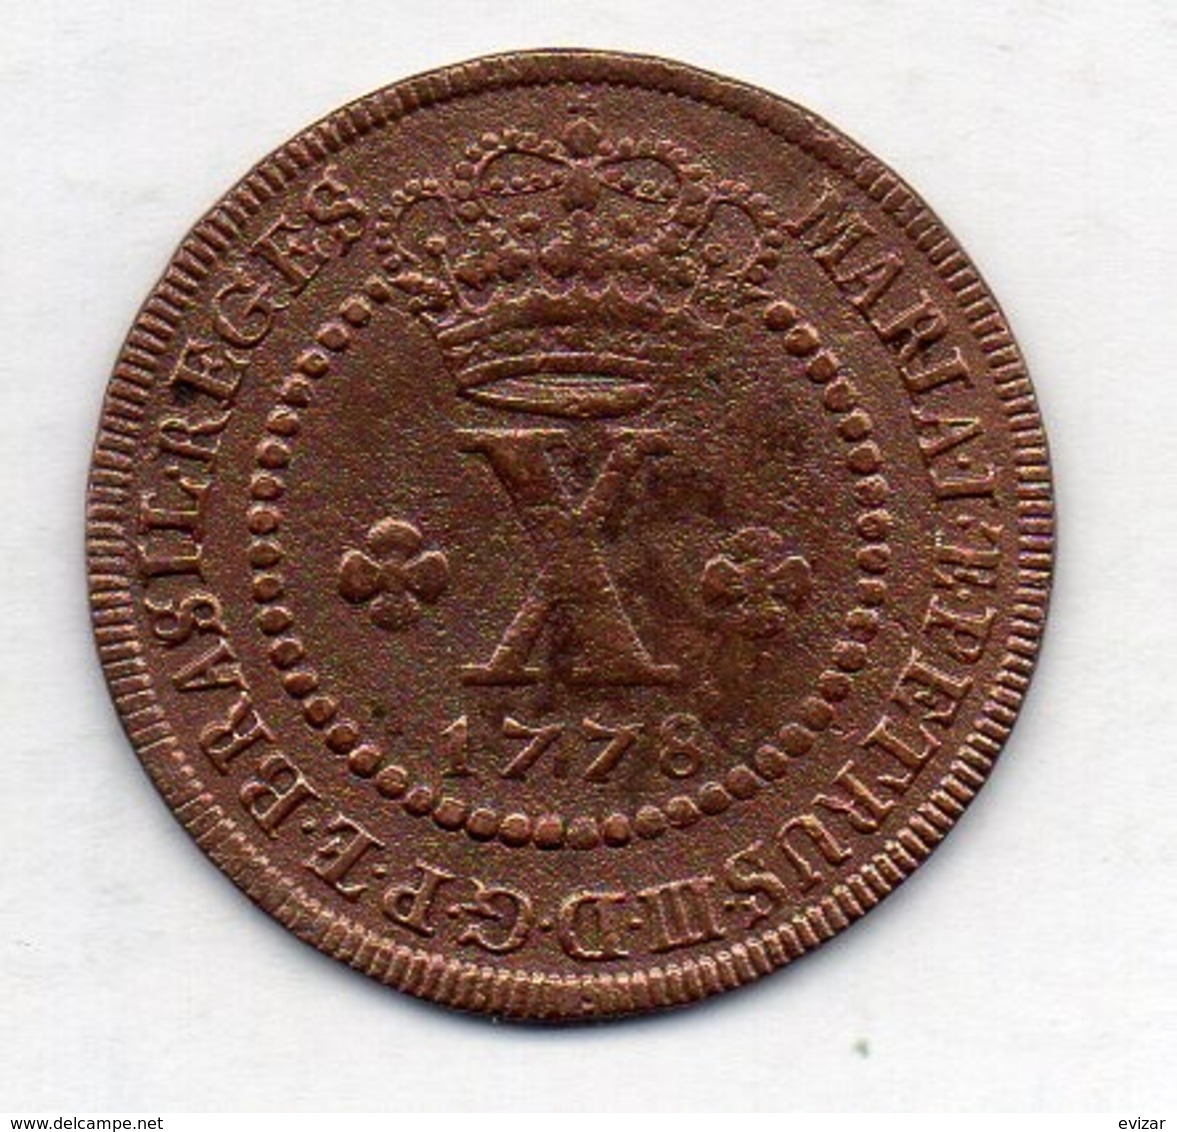 BRAZIL, 10 Reis, 1778, Copper, KM #201 - Brazil